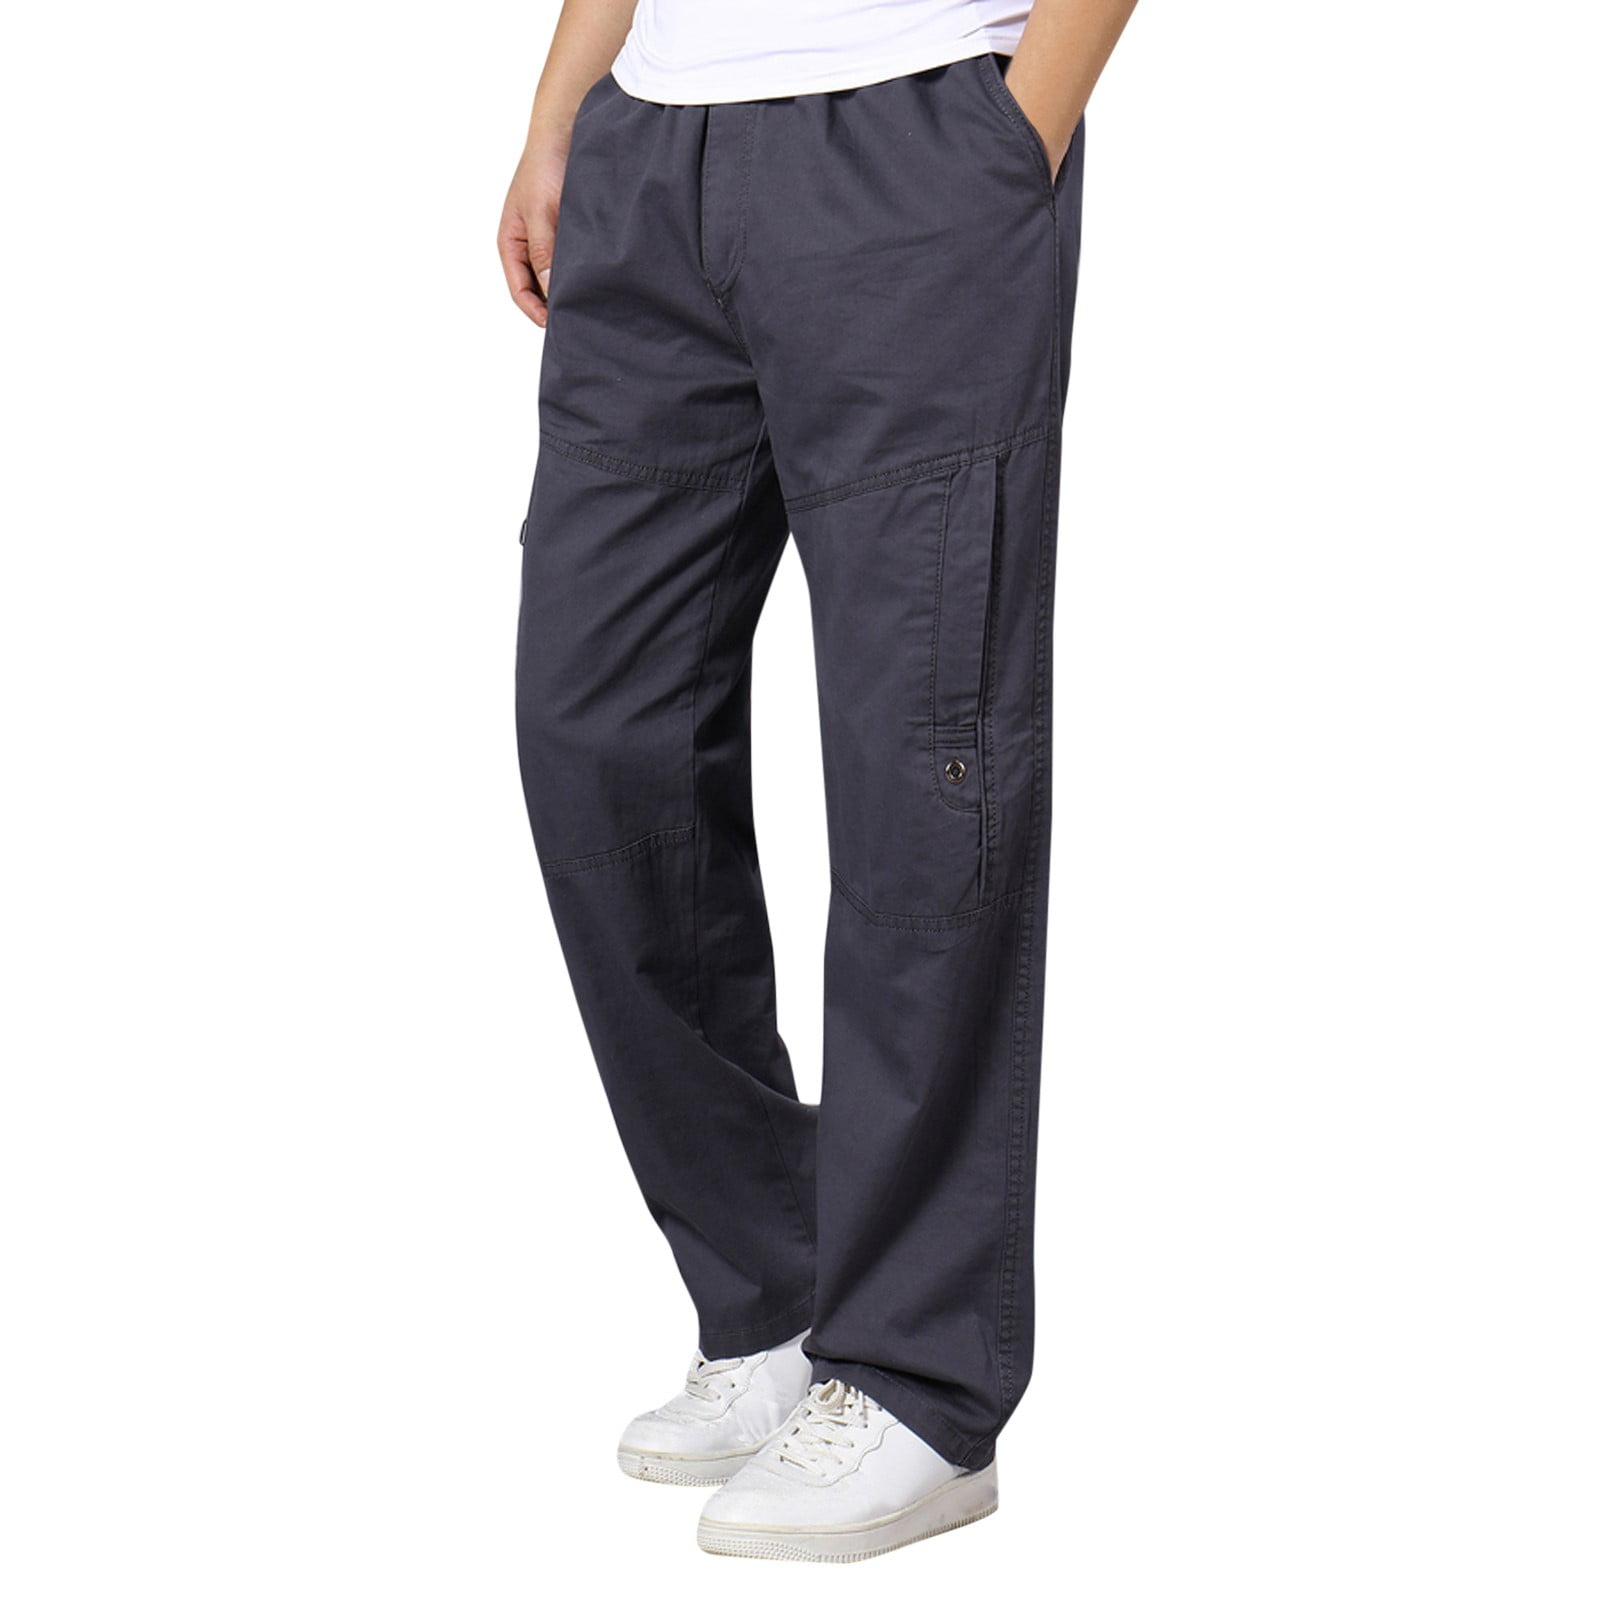 Pedort Work Pants for Men Work Cargo Pants for Men in Cotton, Big and ...